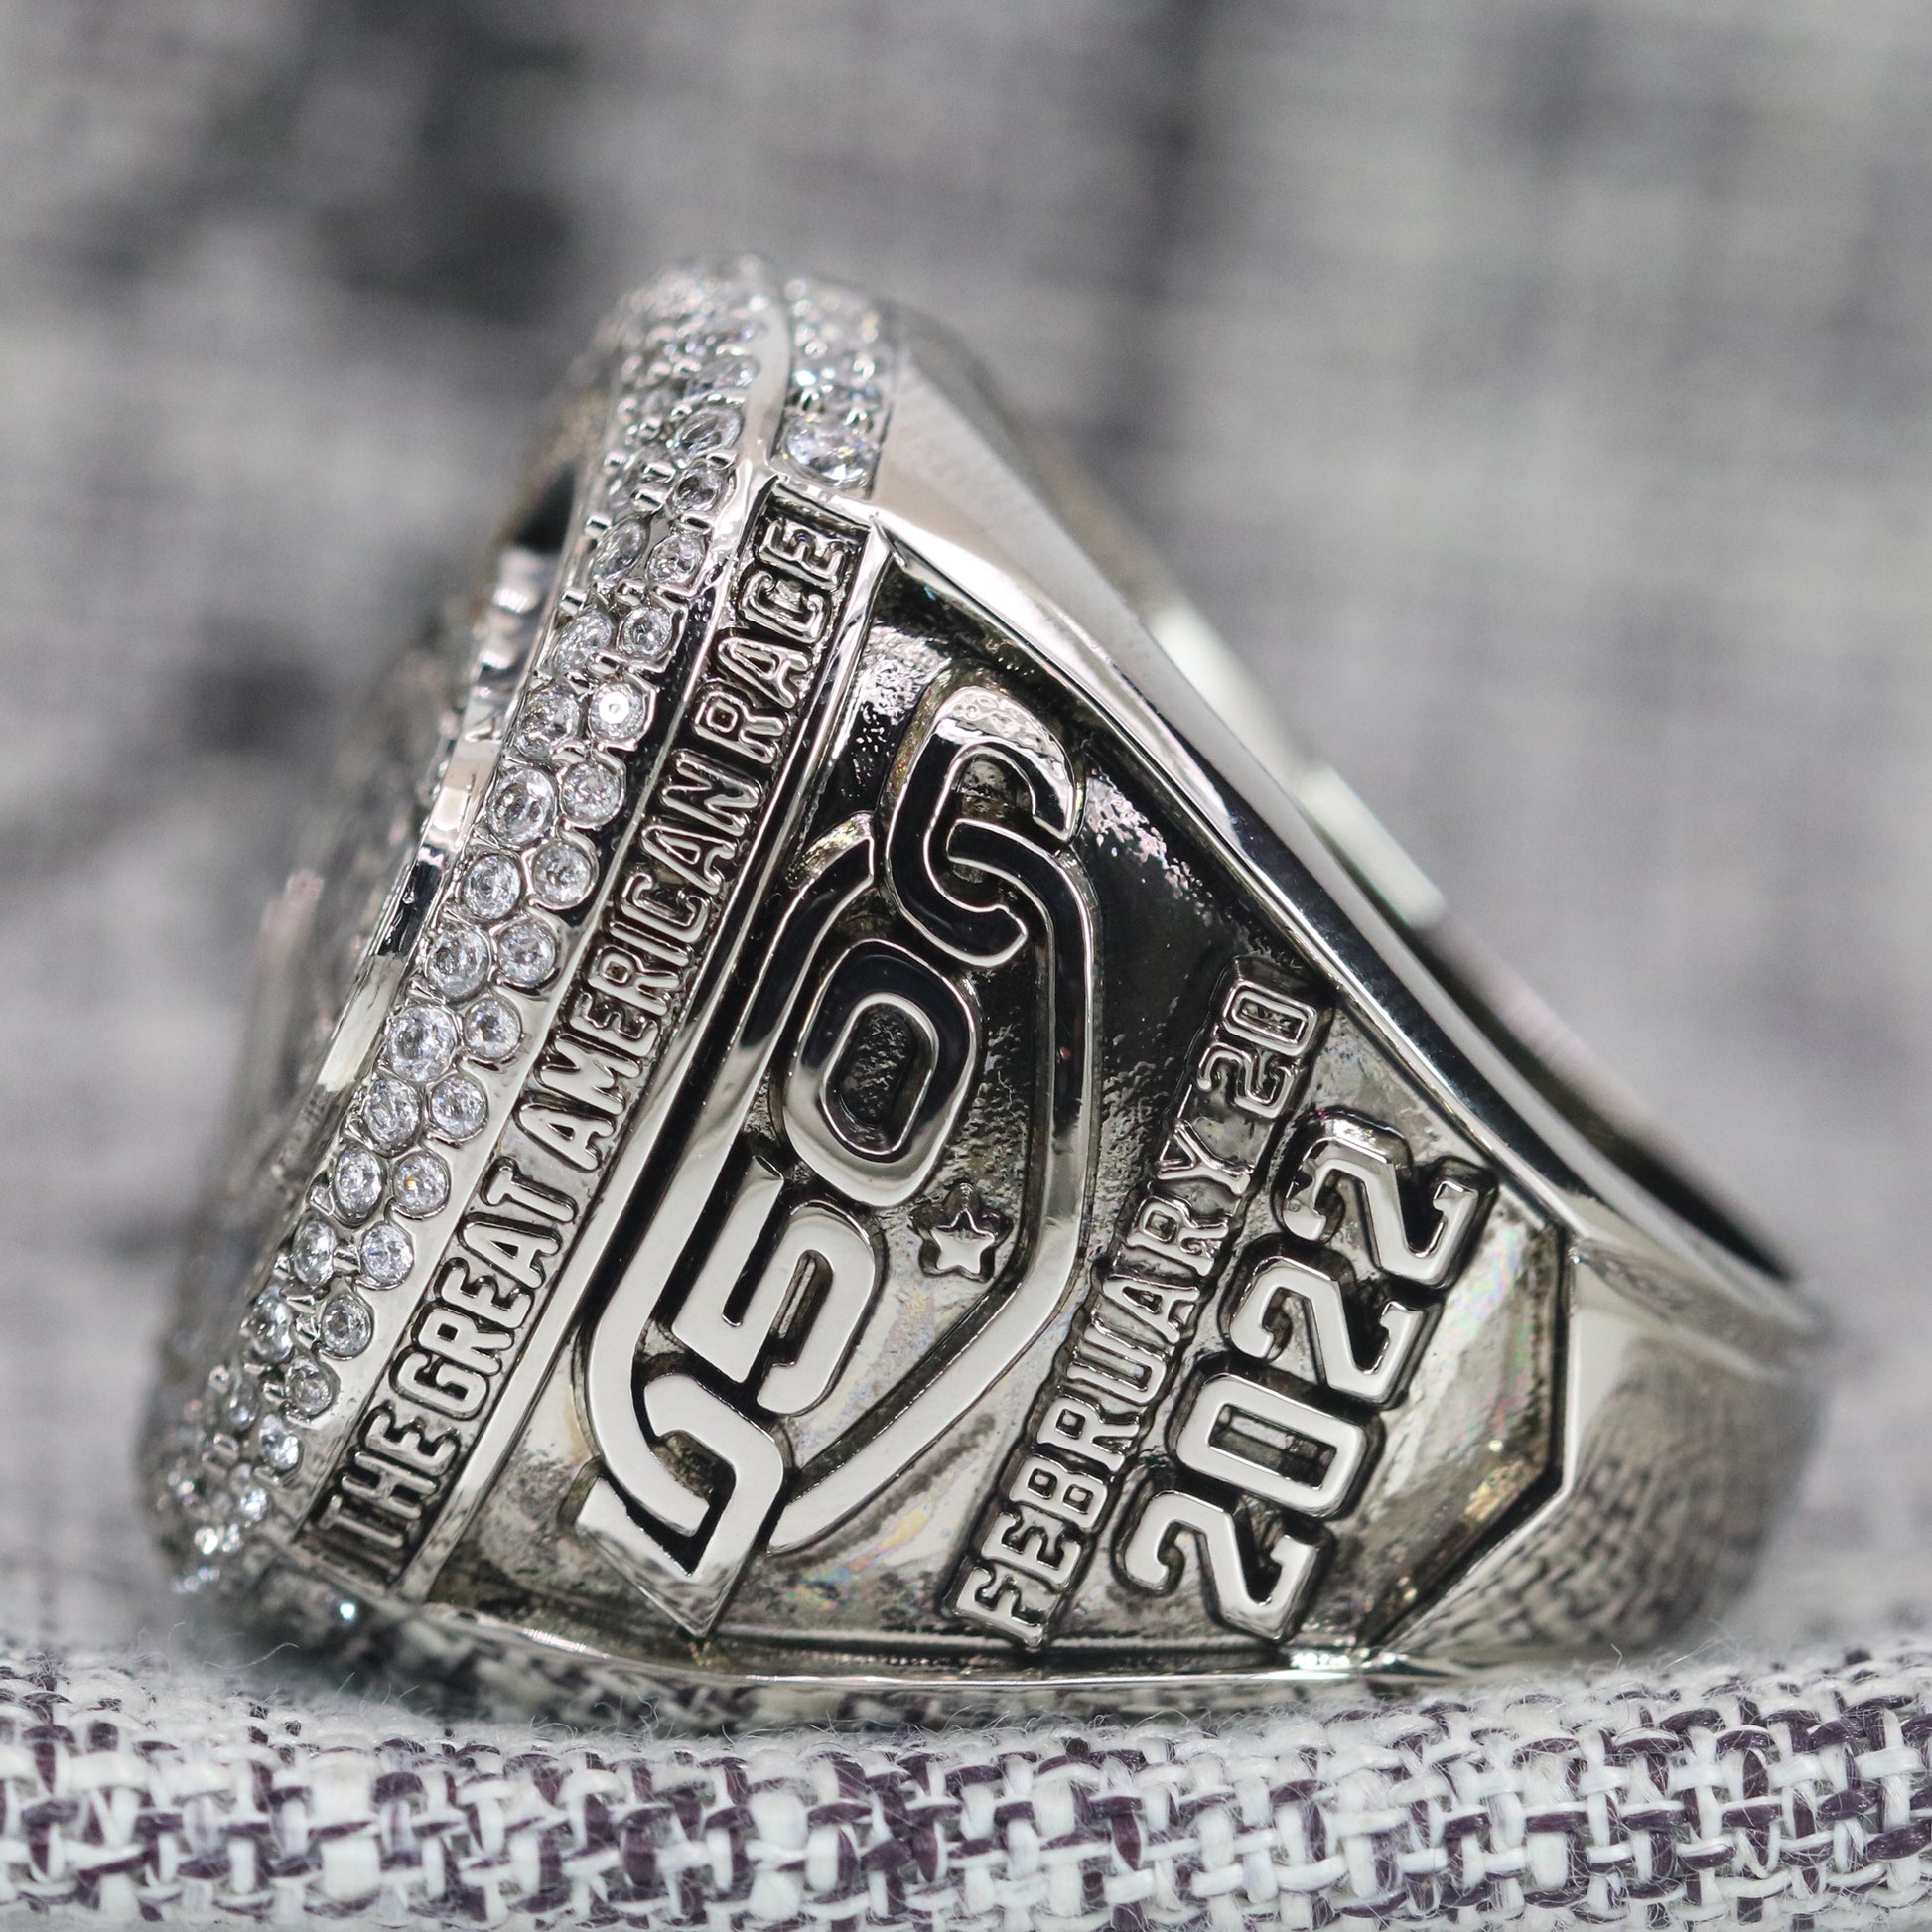 Daytona 500 Nascar Championship Ring (2022) - Premium Series - Rings For Champs, NFL rings, MLB rings, NBA rings, NHL rings, NCAA rings, Super bowl ring, Superbowl ring, Super bowl rings, Superbowl rings, Dallas Cowboys